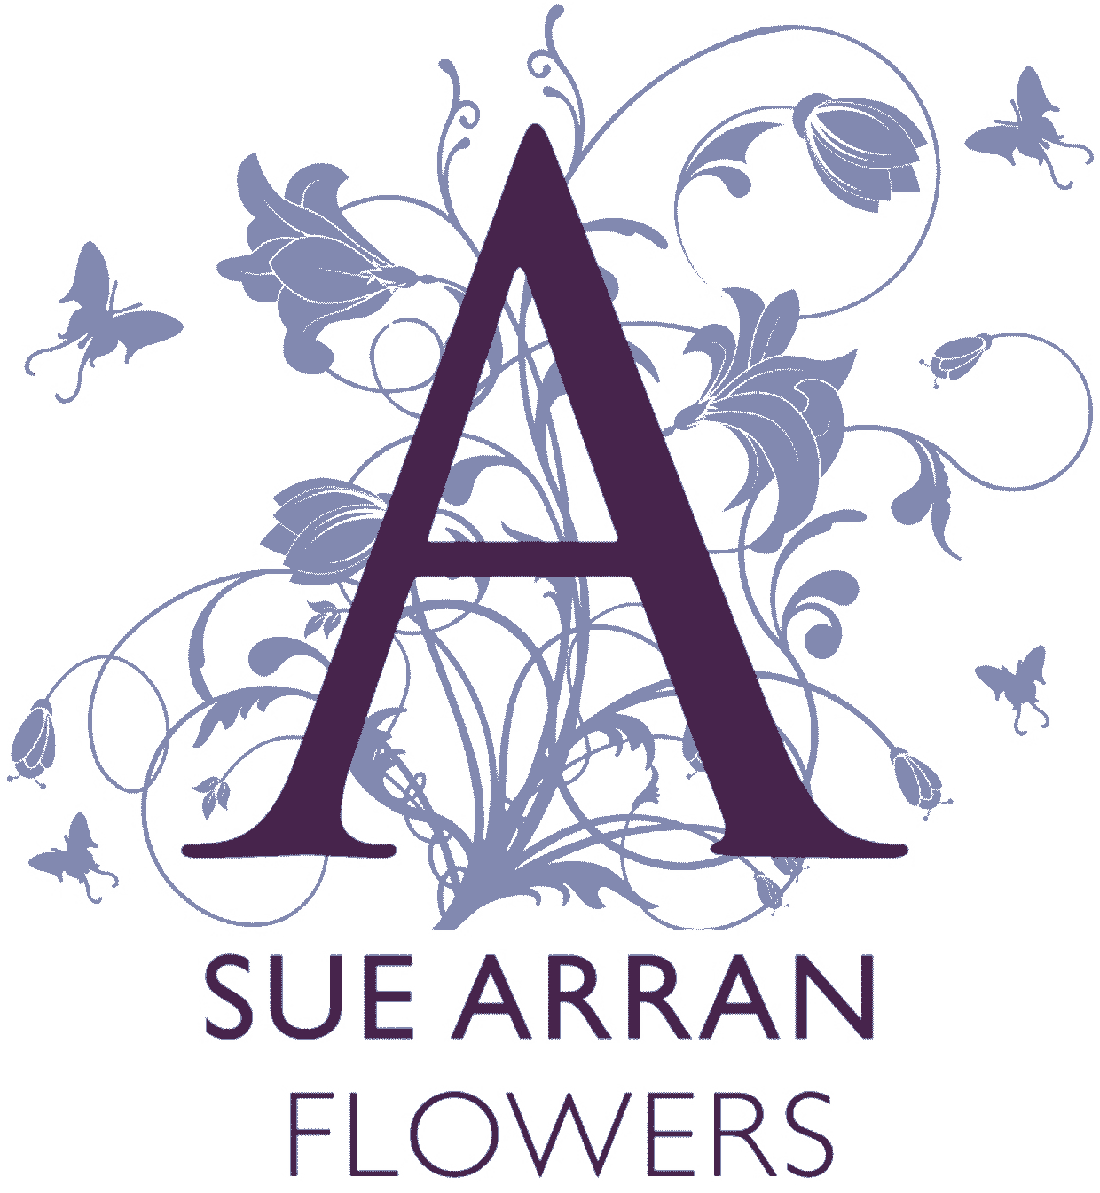 Sue Arran Flowers logo designed by ideology.uk.com